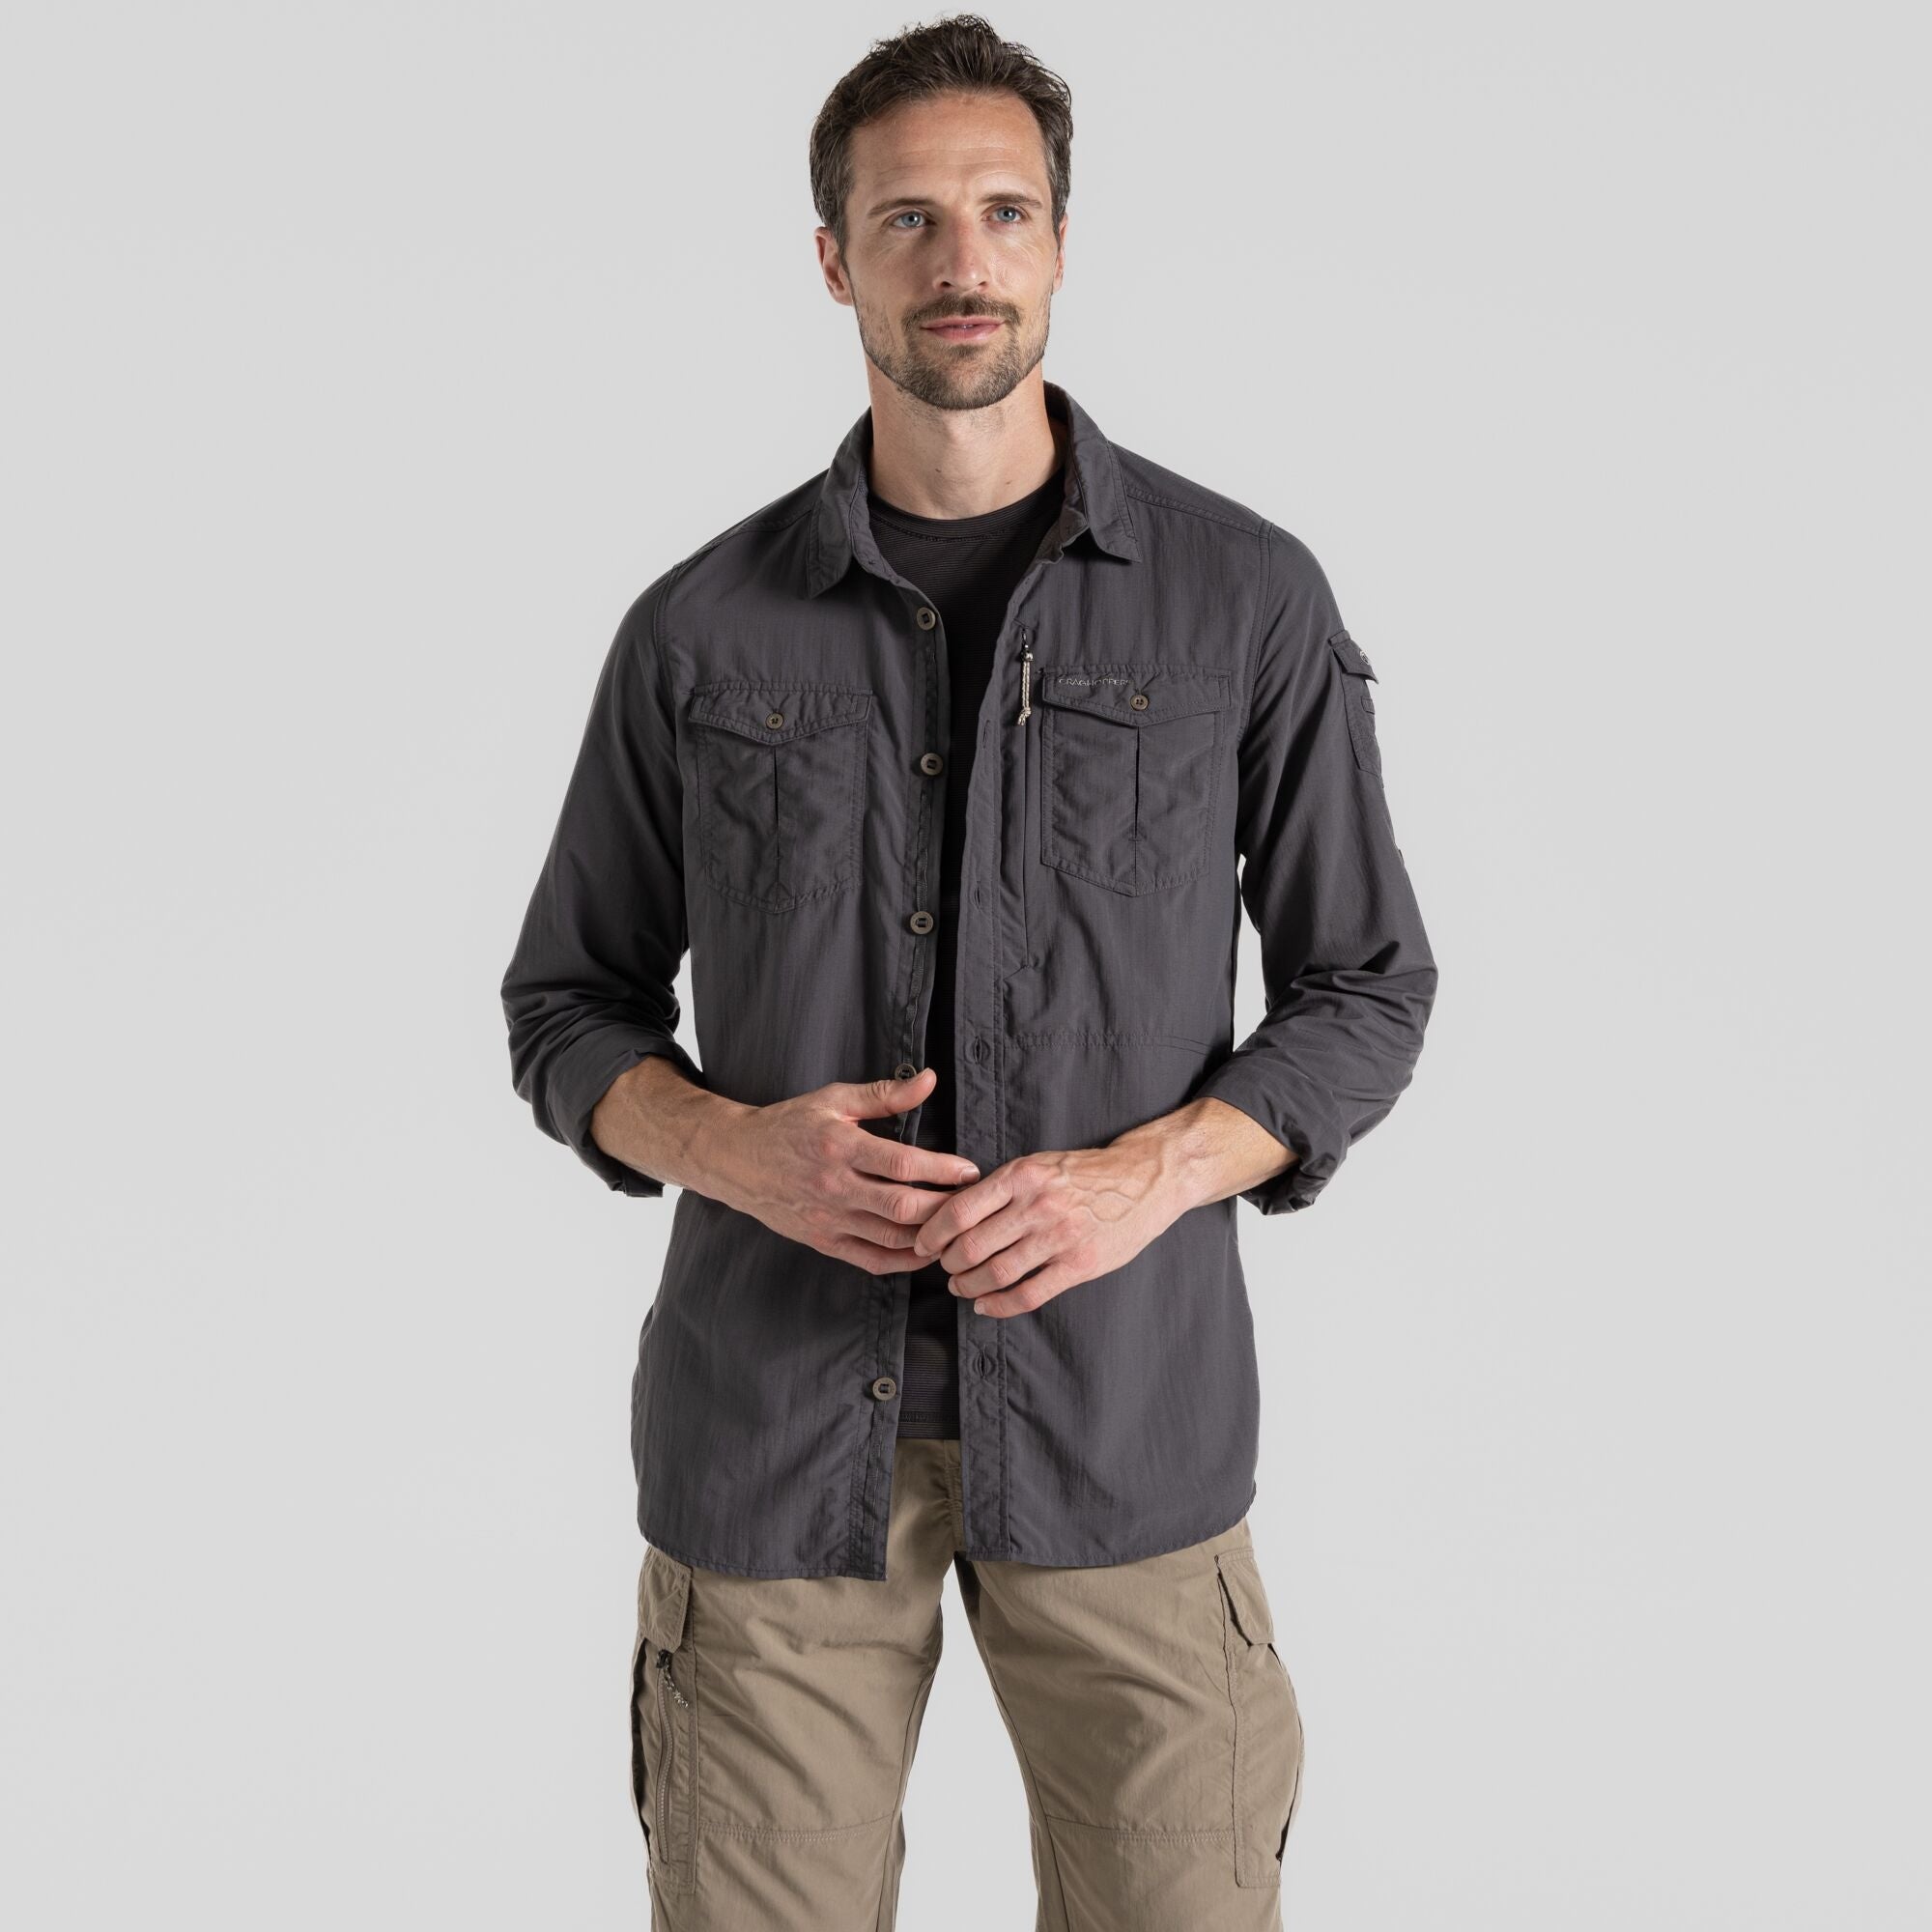 Men's Insect Shield® Adventure III Long Sleeved Shirt | Black Pepper